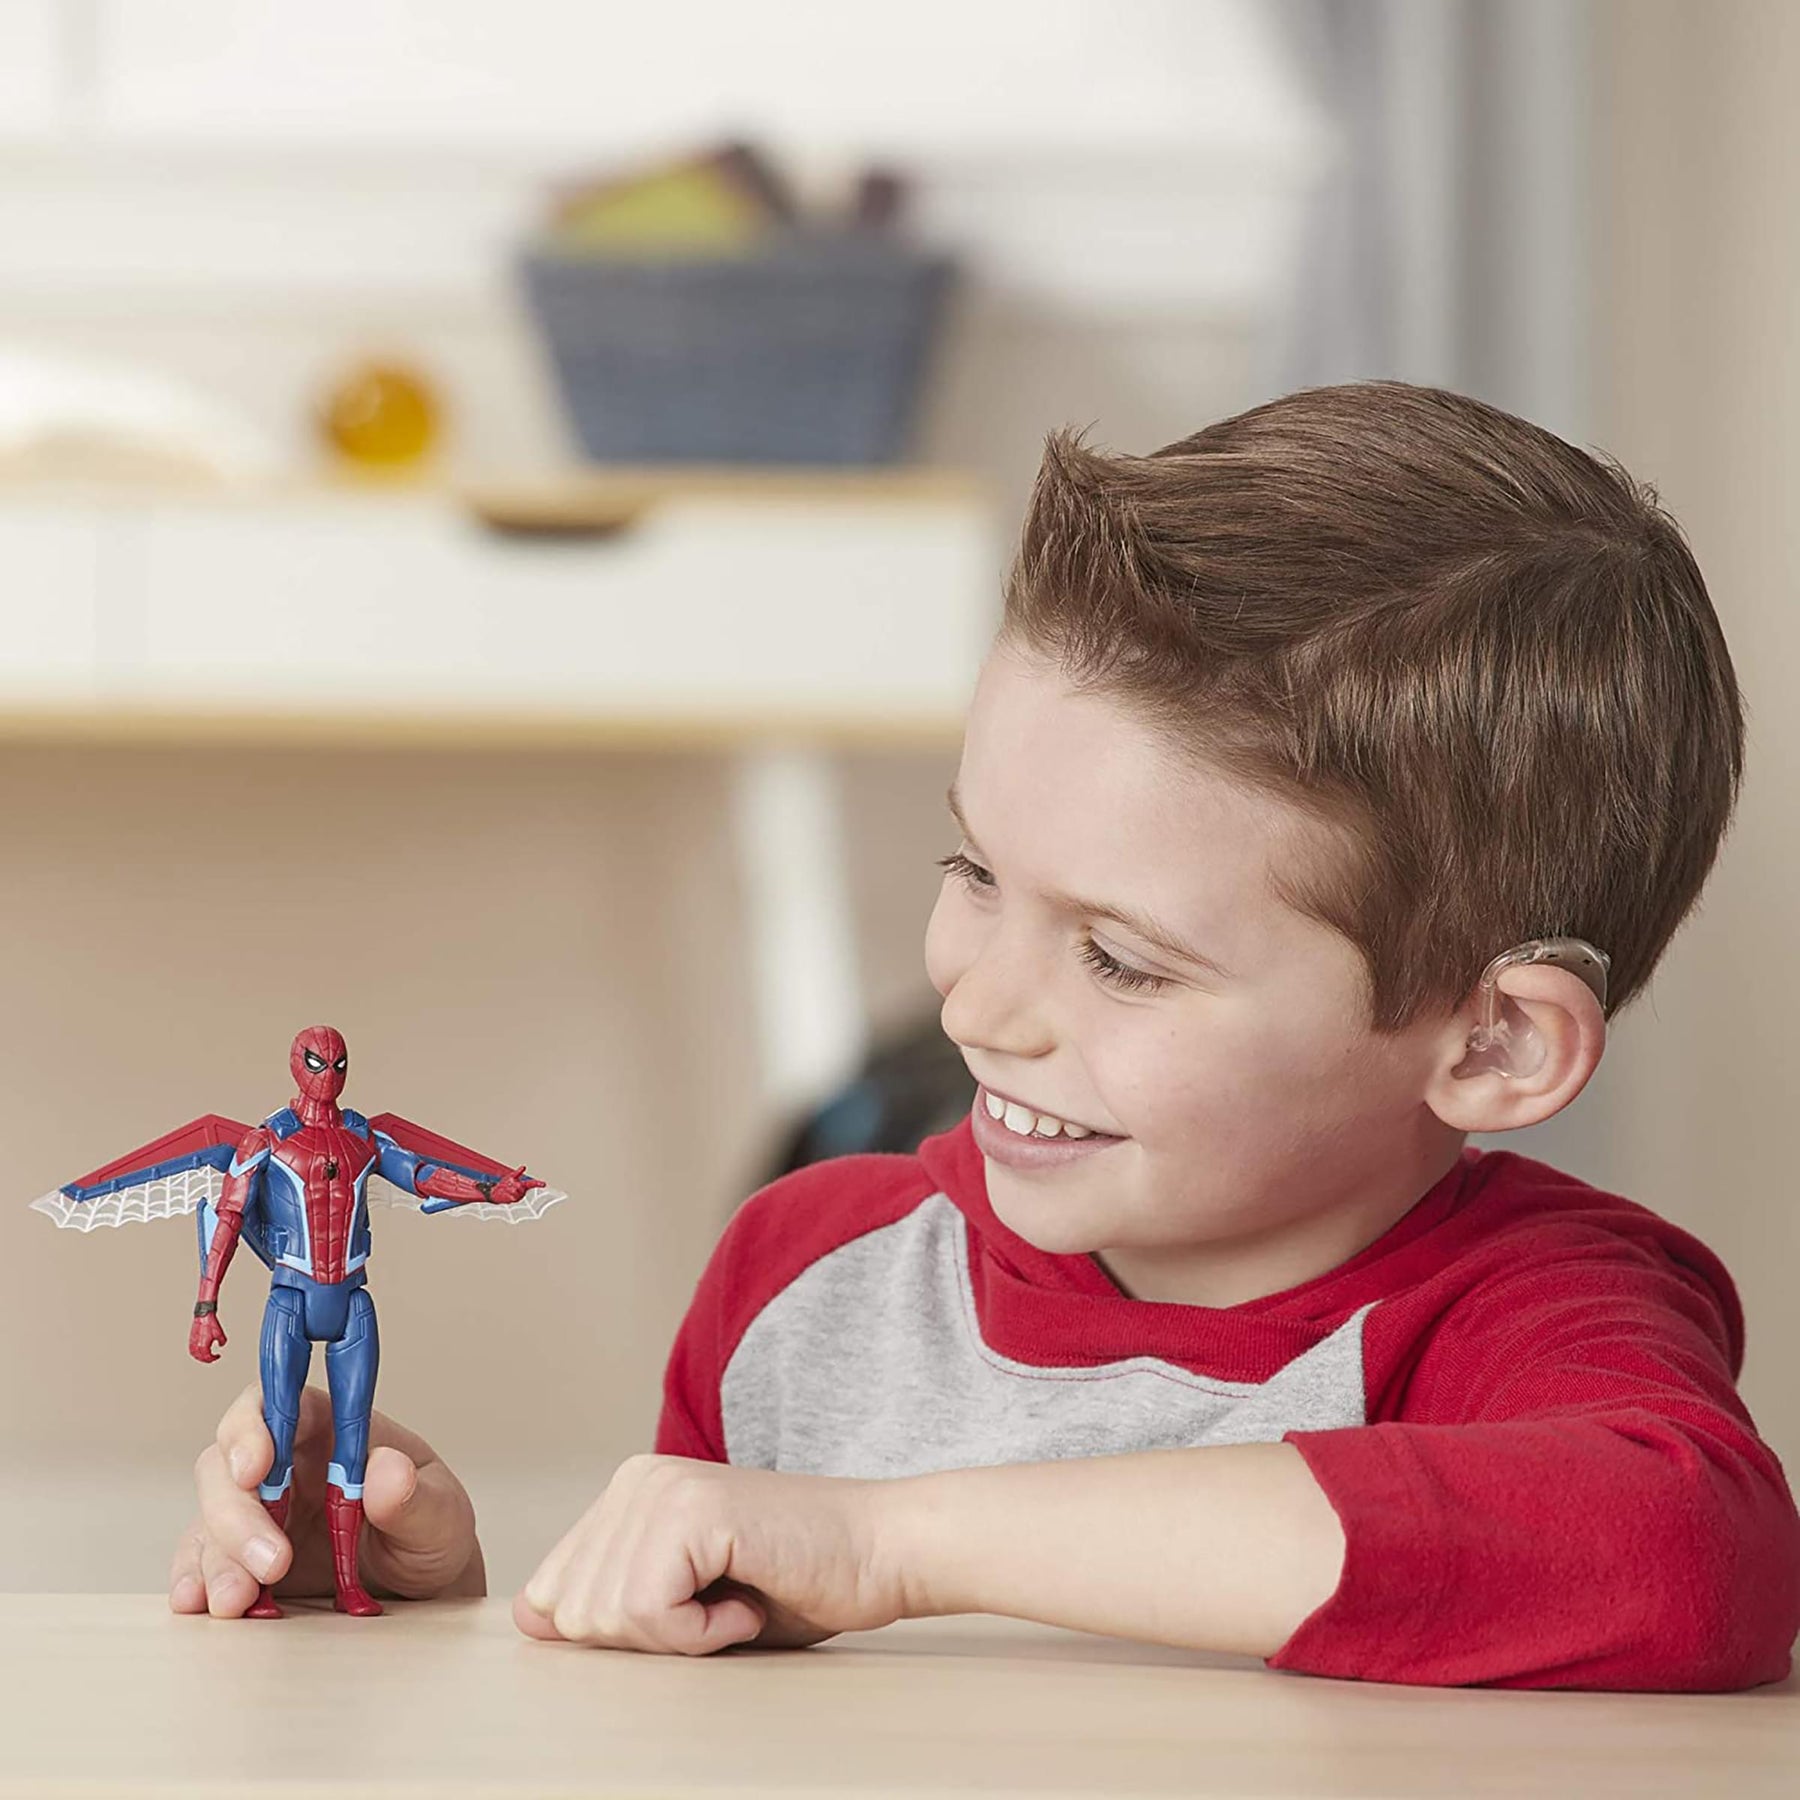 Marvel Spider-Man Far From Home 6 Inch Action Figure | Glider Gear Spider-Man